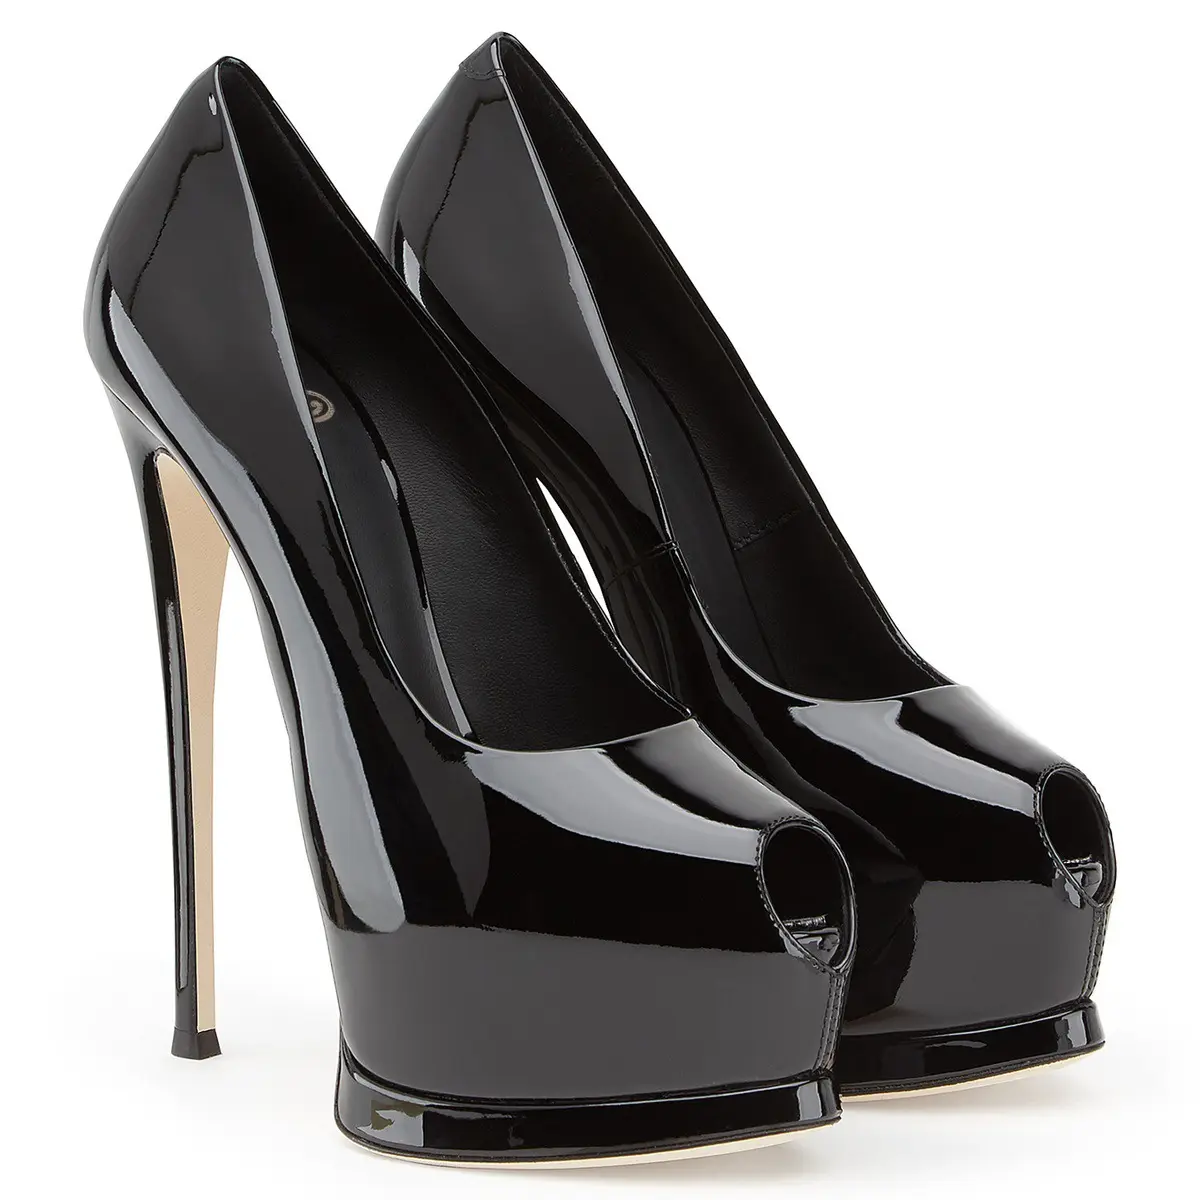 Plus Size Sexy Evening Dress D'orsay Shoes Black Patent Leather Ladies Heels Women Peep Toe High Heel Pumps